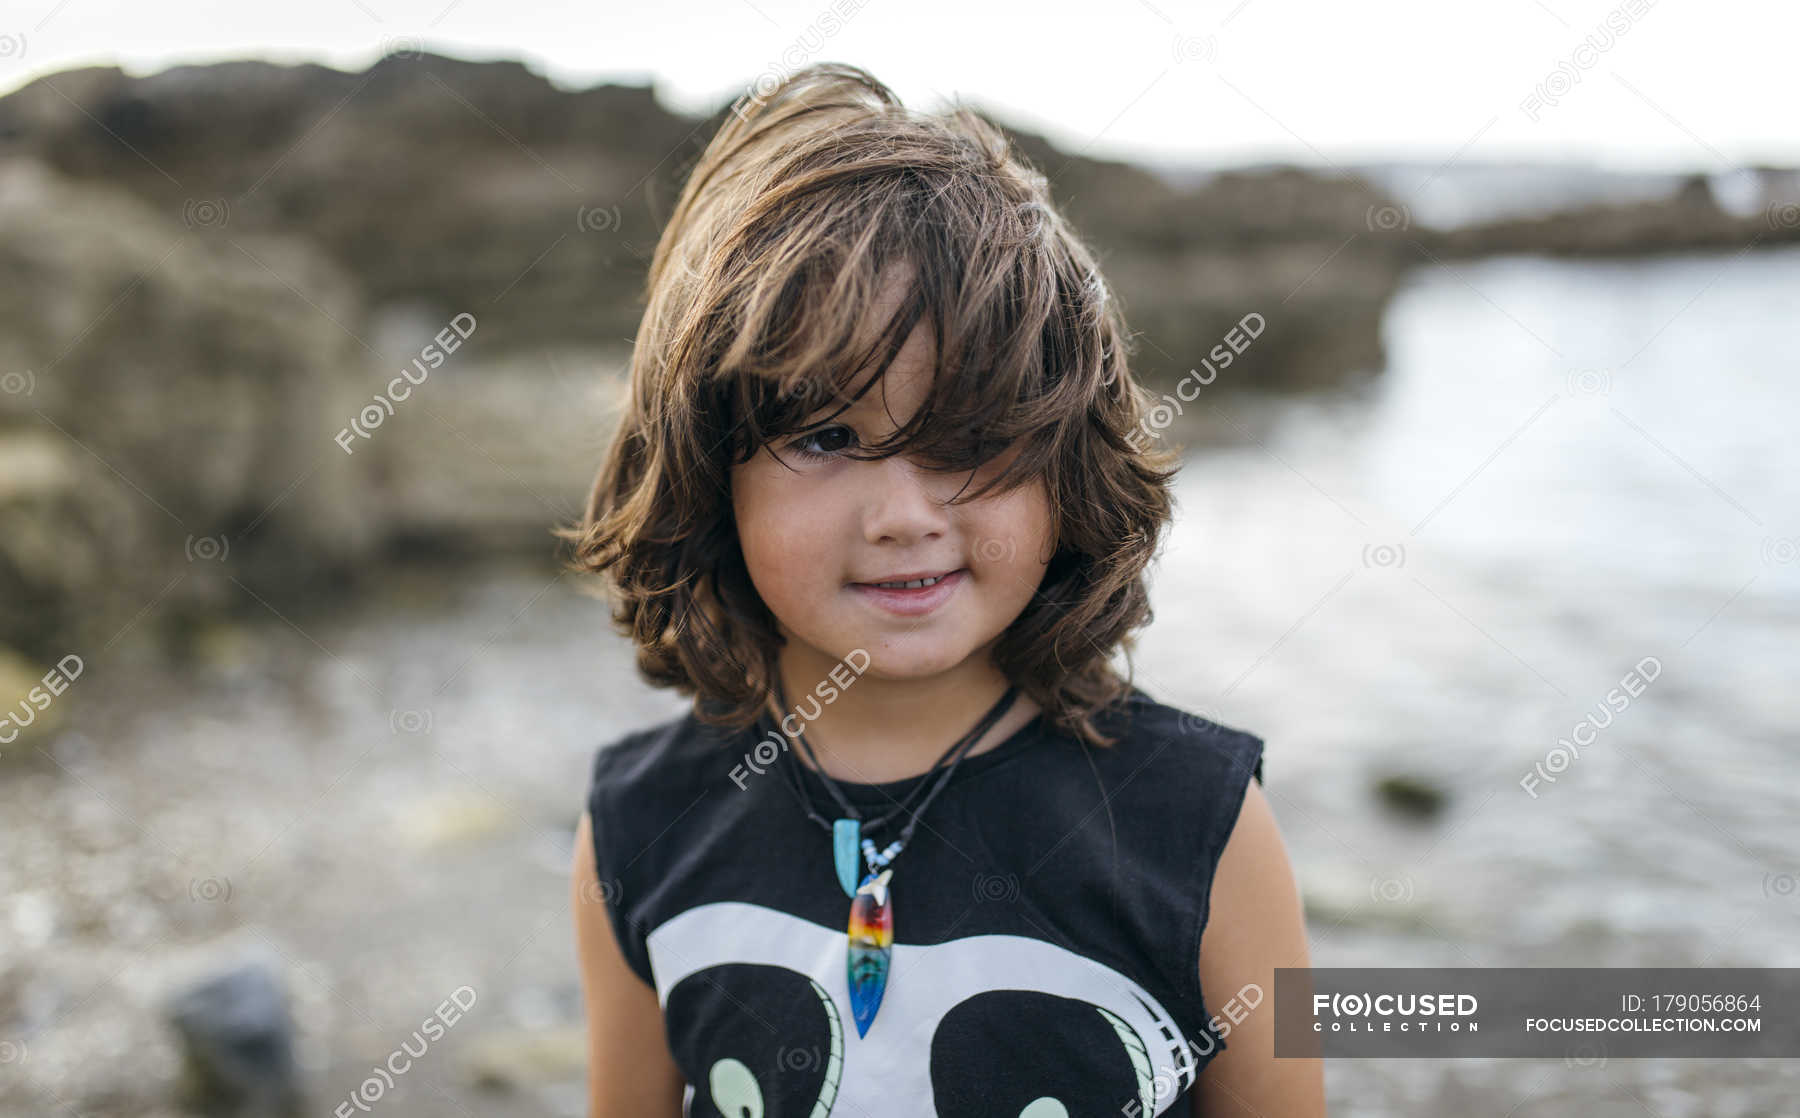 Spain, Gijon, portrait of little boy with brown hair on the beach — bangs,  Mid Length Hair - Stock Photo | #179056864